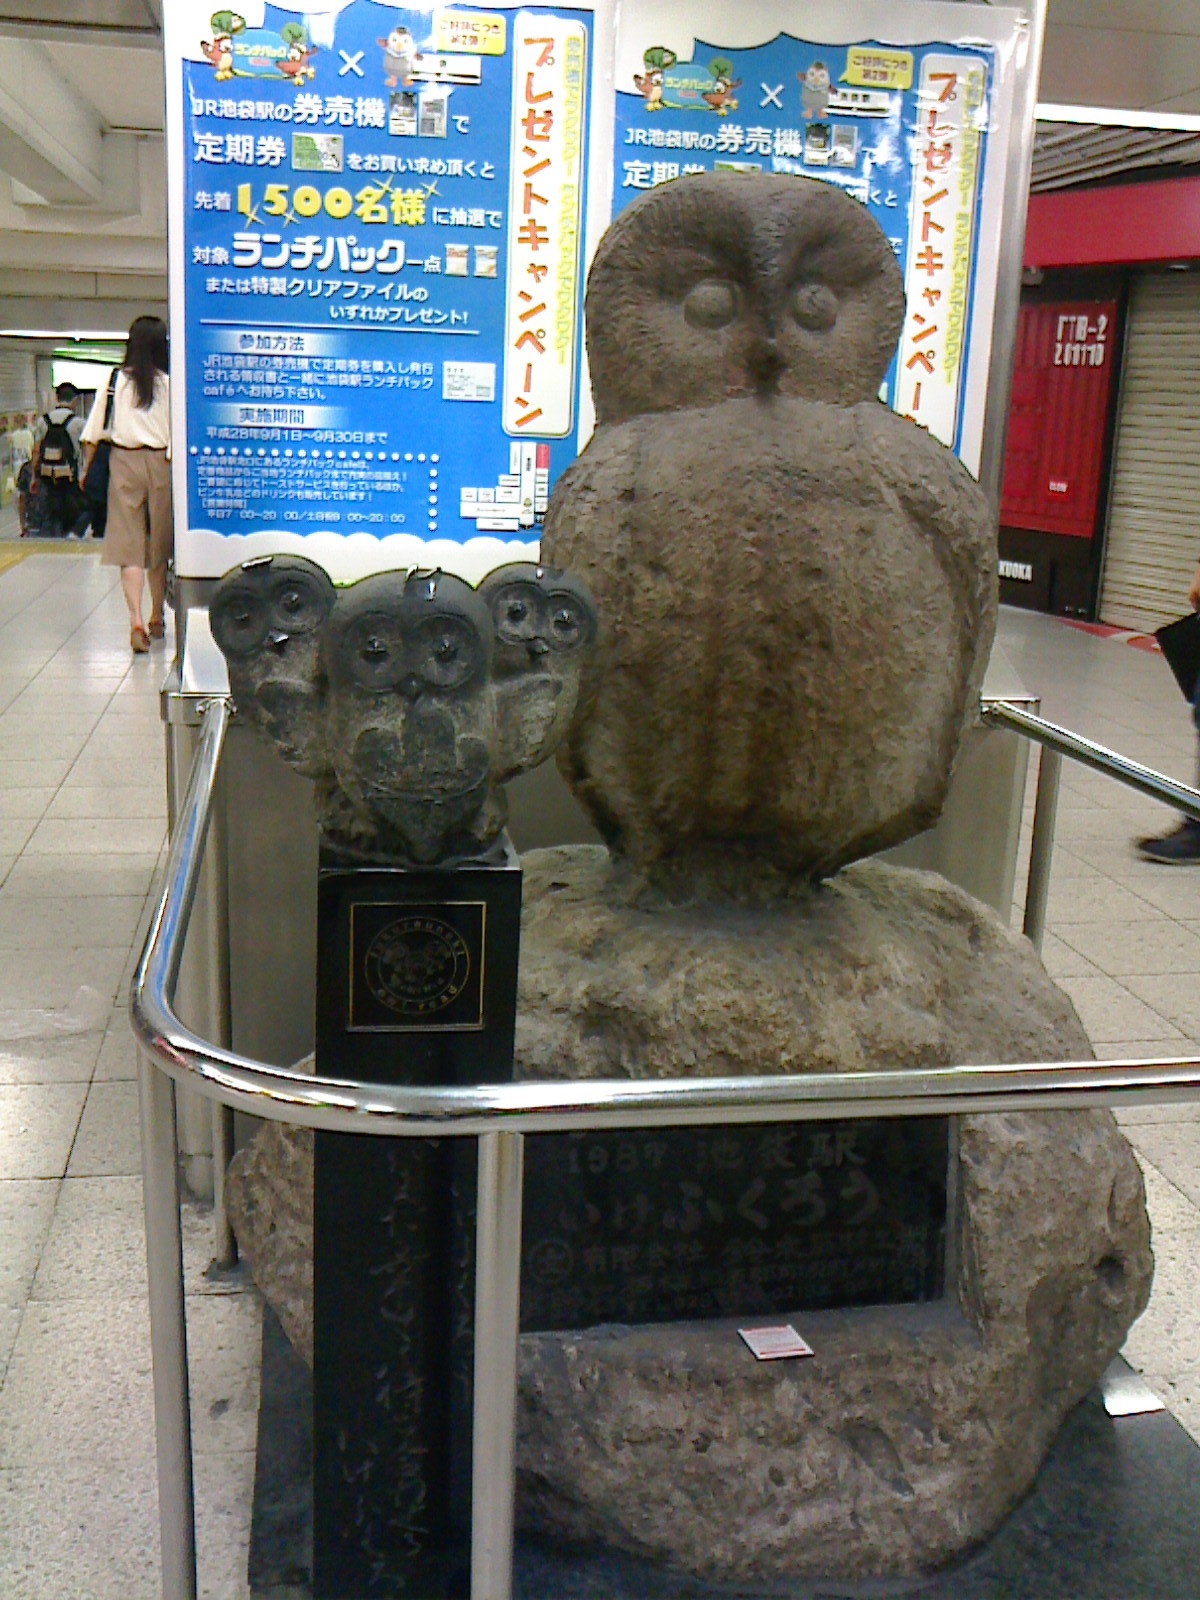 3. Say hello to the icon of Ikebukuro Station - the Ikefukuro statue!